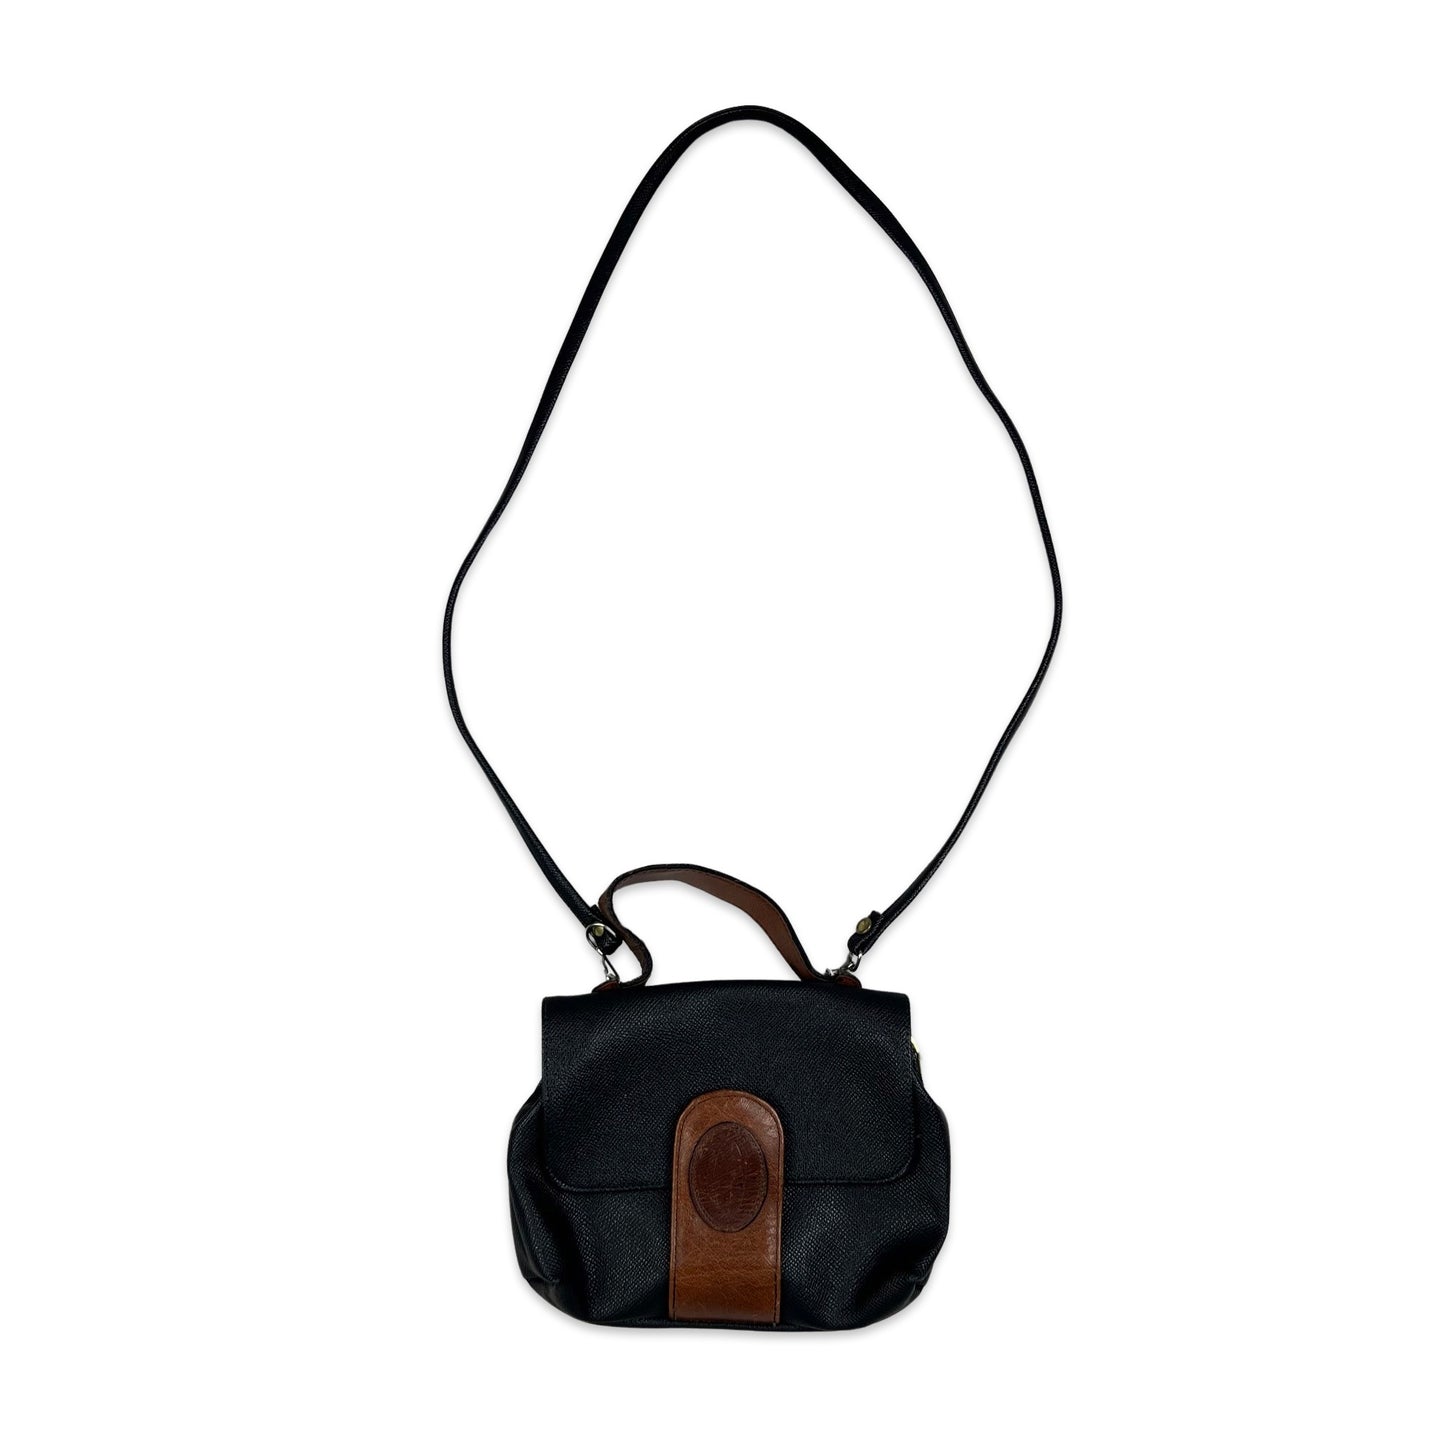 Vintage 80s Black Brown Leather Crossbody Handbag